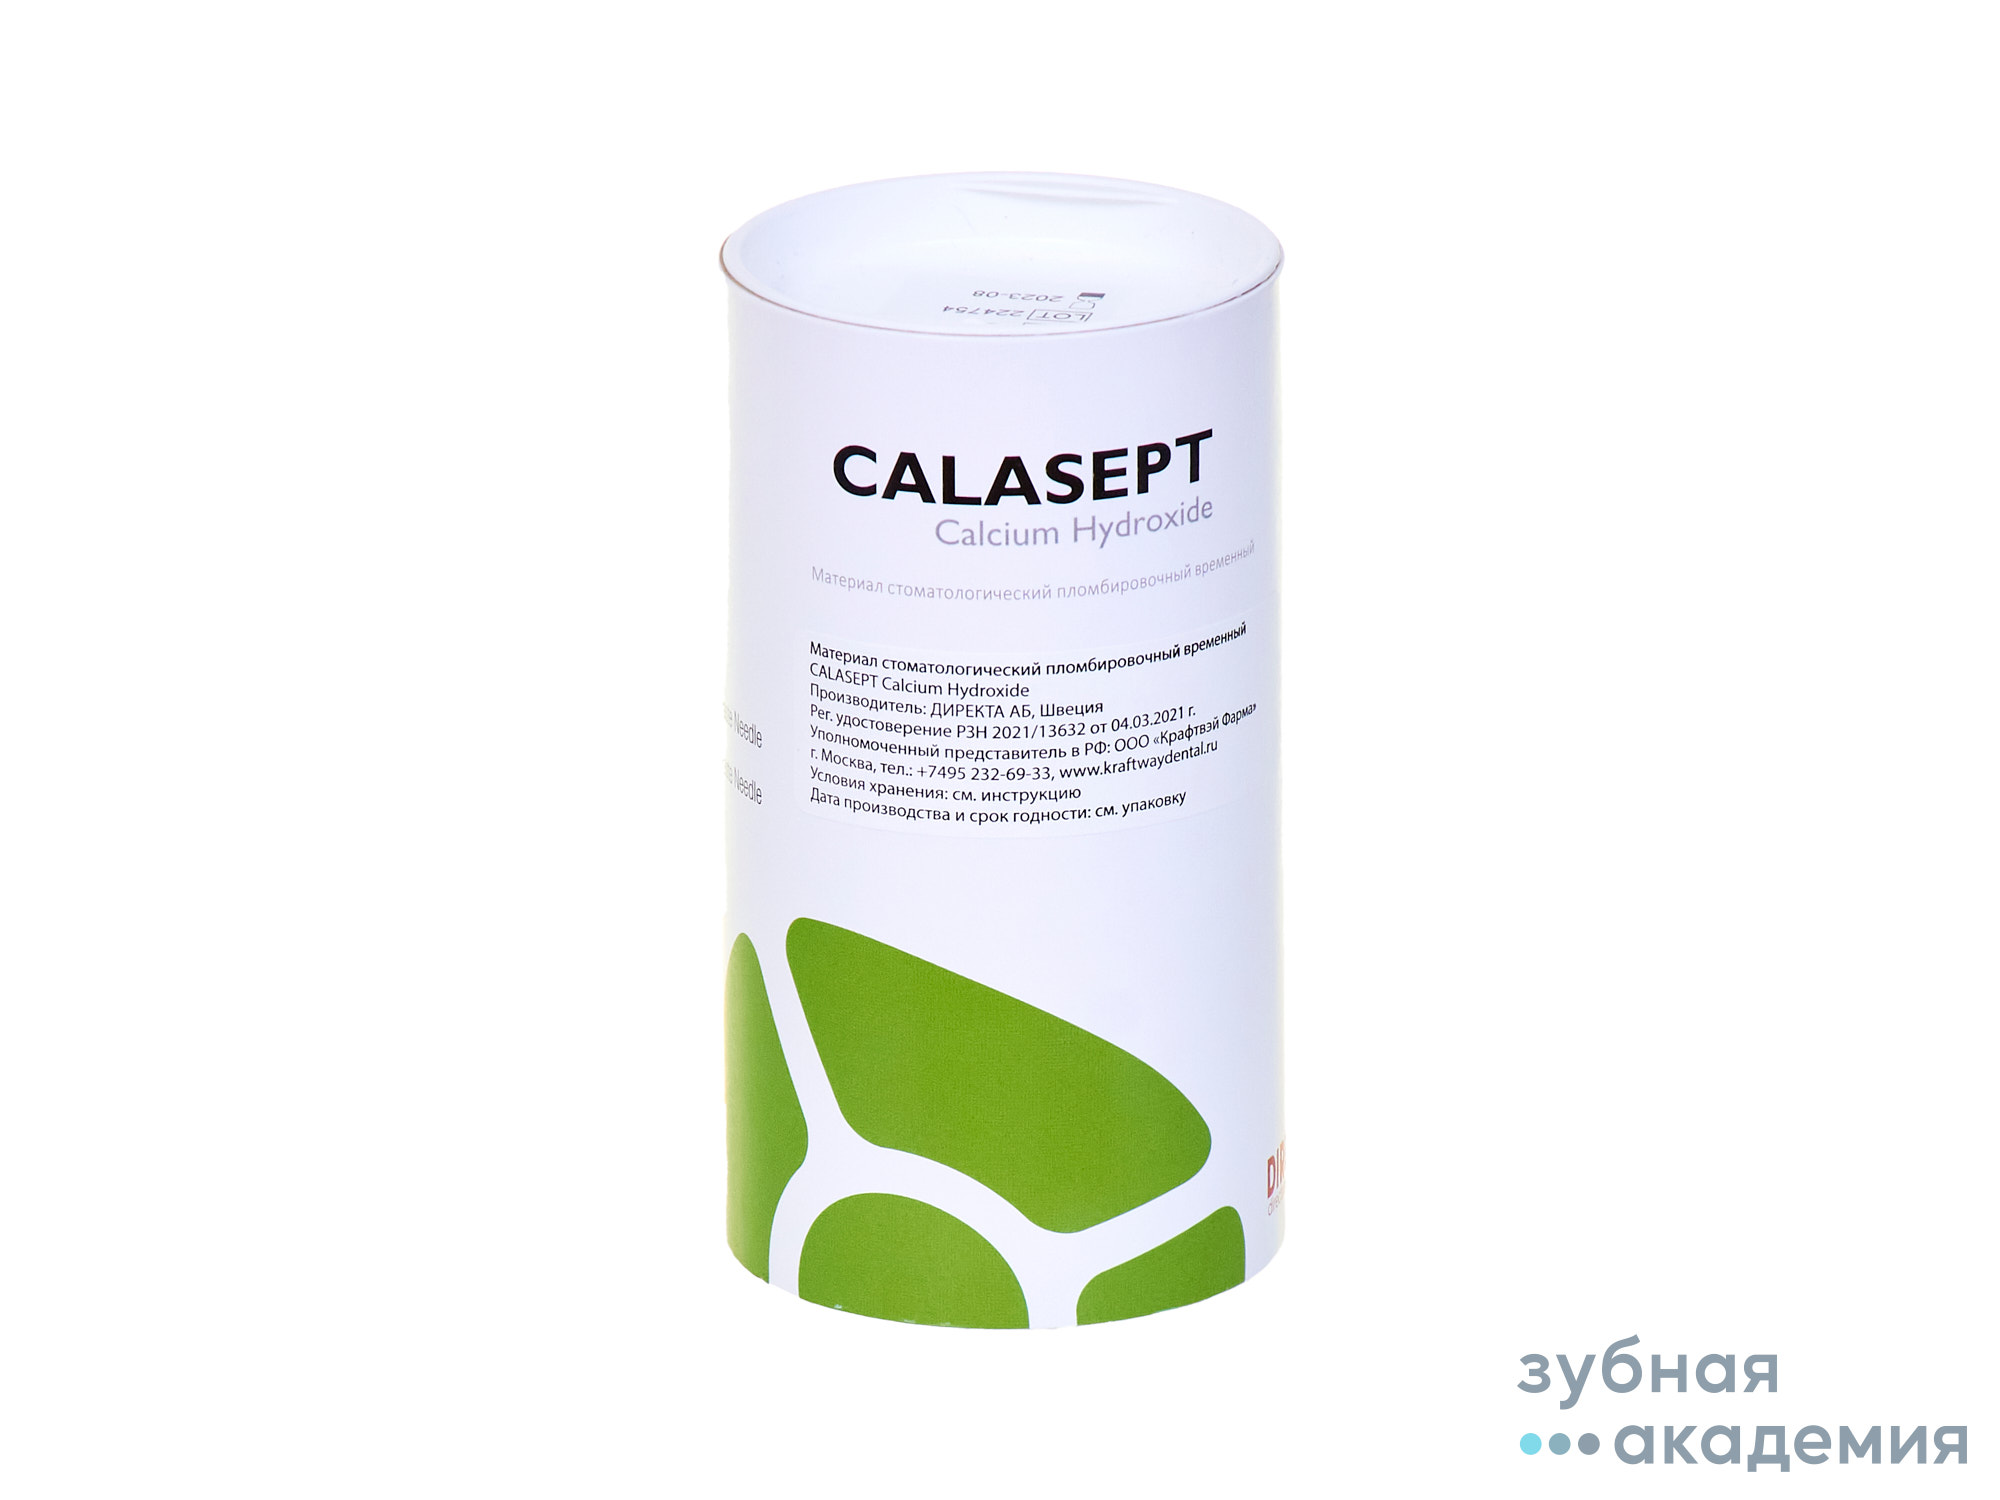 Calasept / Каласепт (4 х 1.5 г) Directa/Швеция